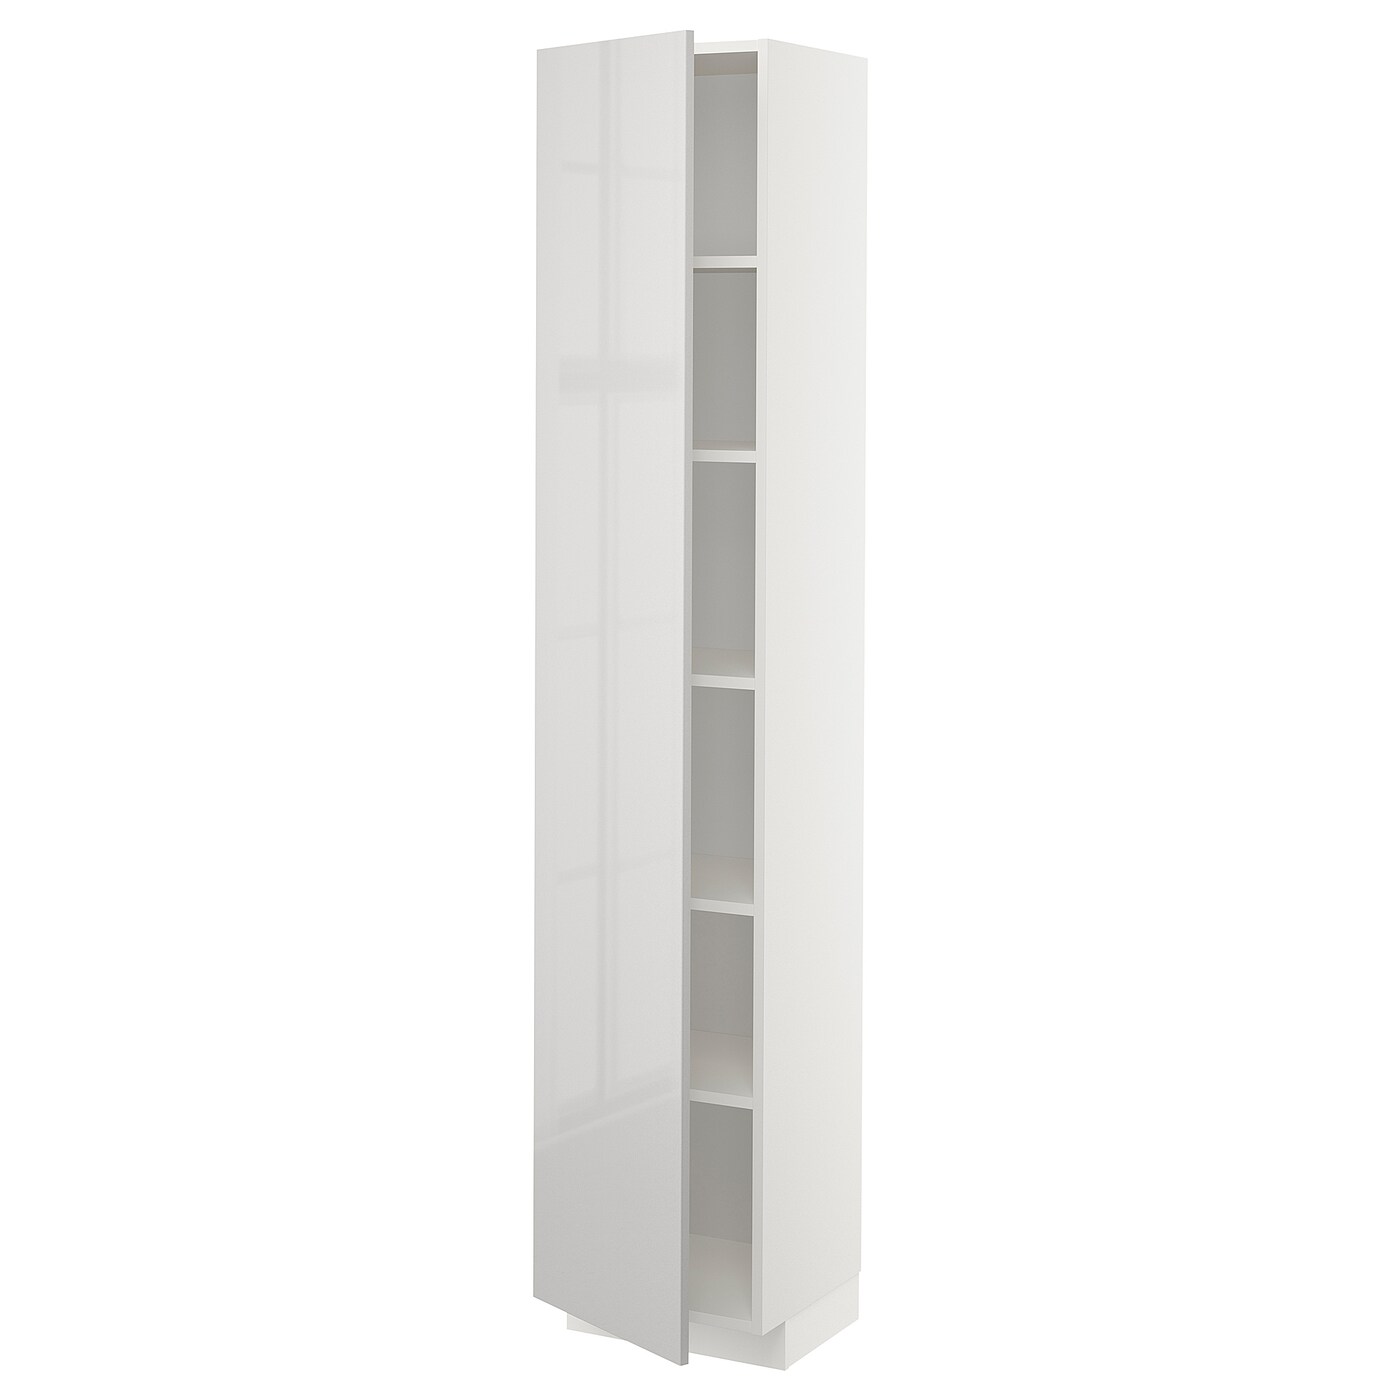 Высокий кухонный шкаф с полками - IKEA METOD/МЕТОД ИКЕА, 200х37х40 см, белый/светло-серый глянцевый